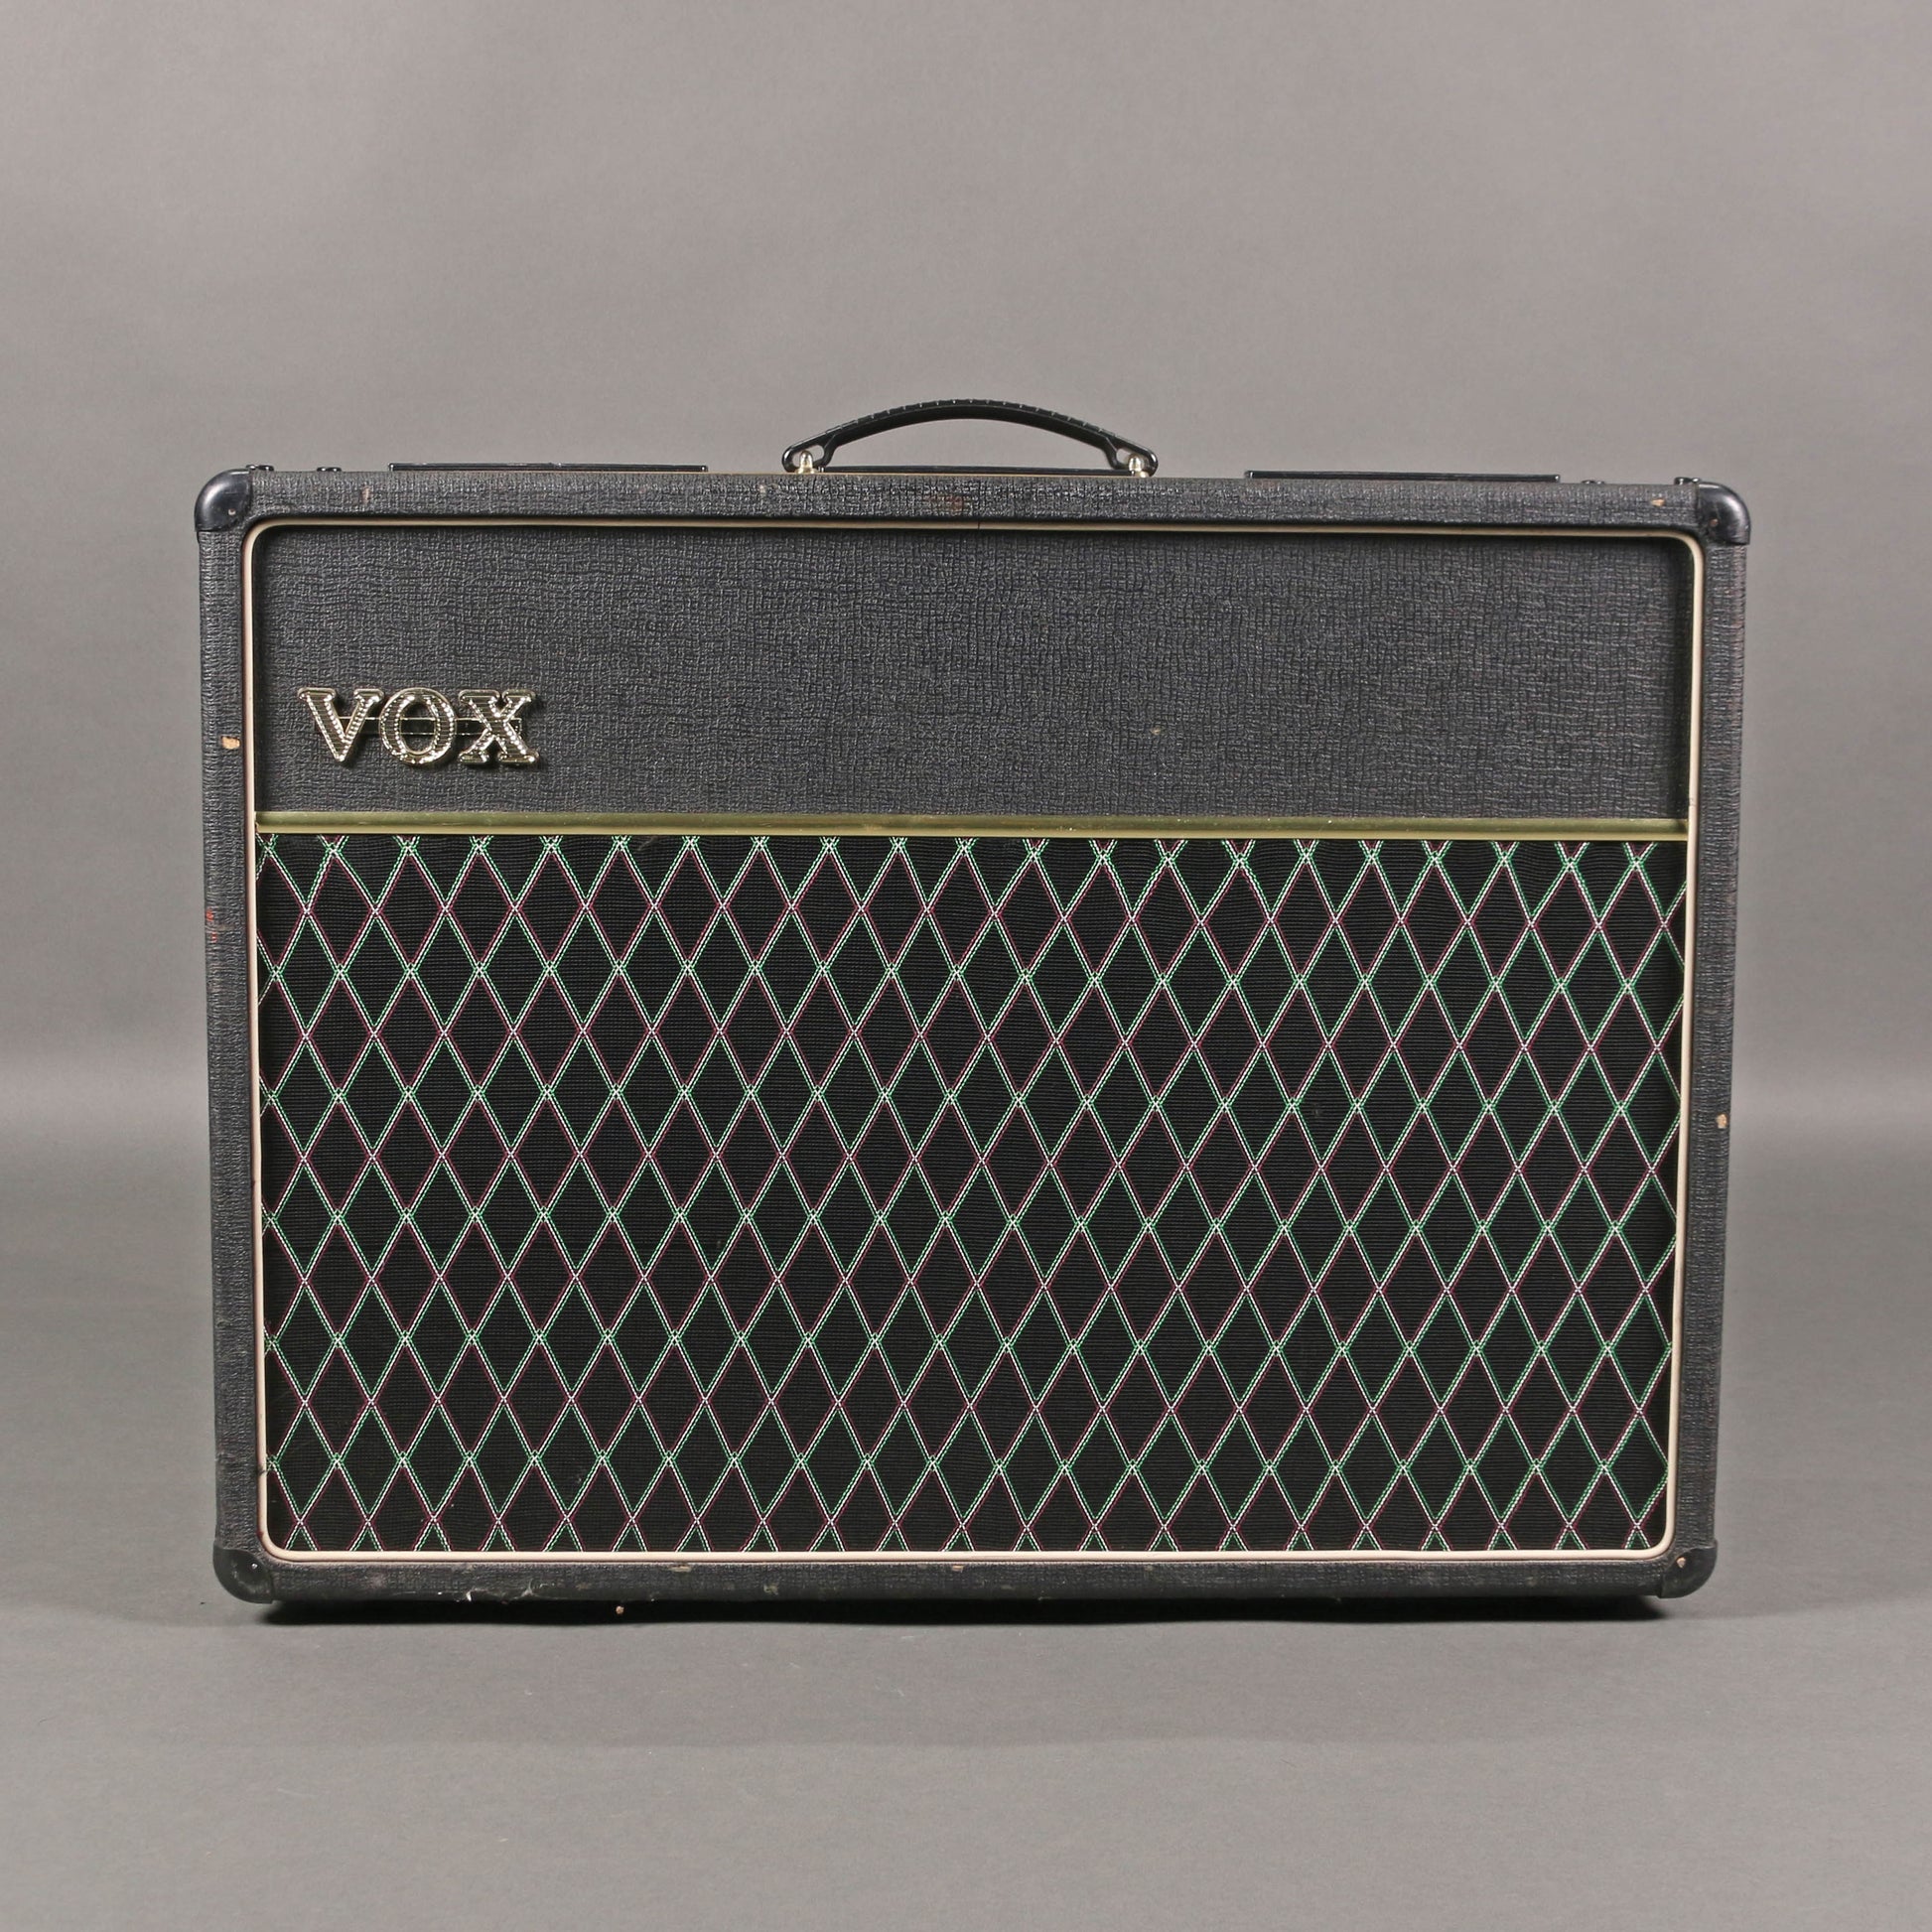 Guitares Archives - Vox Amps